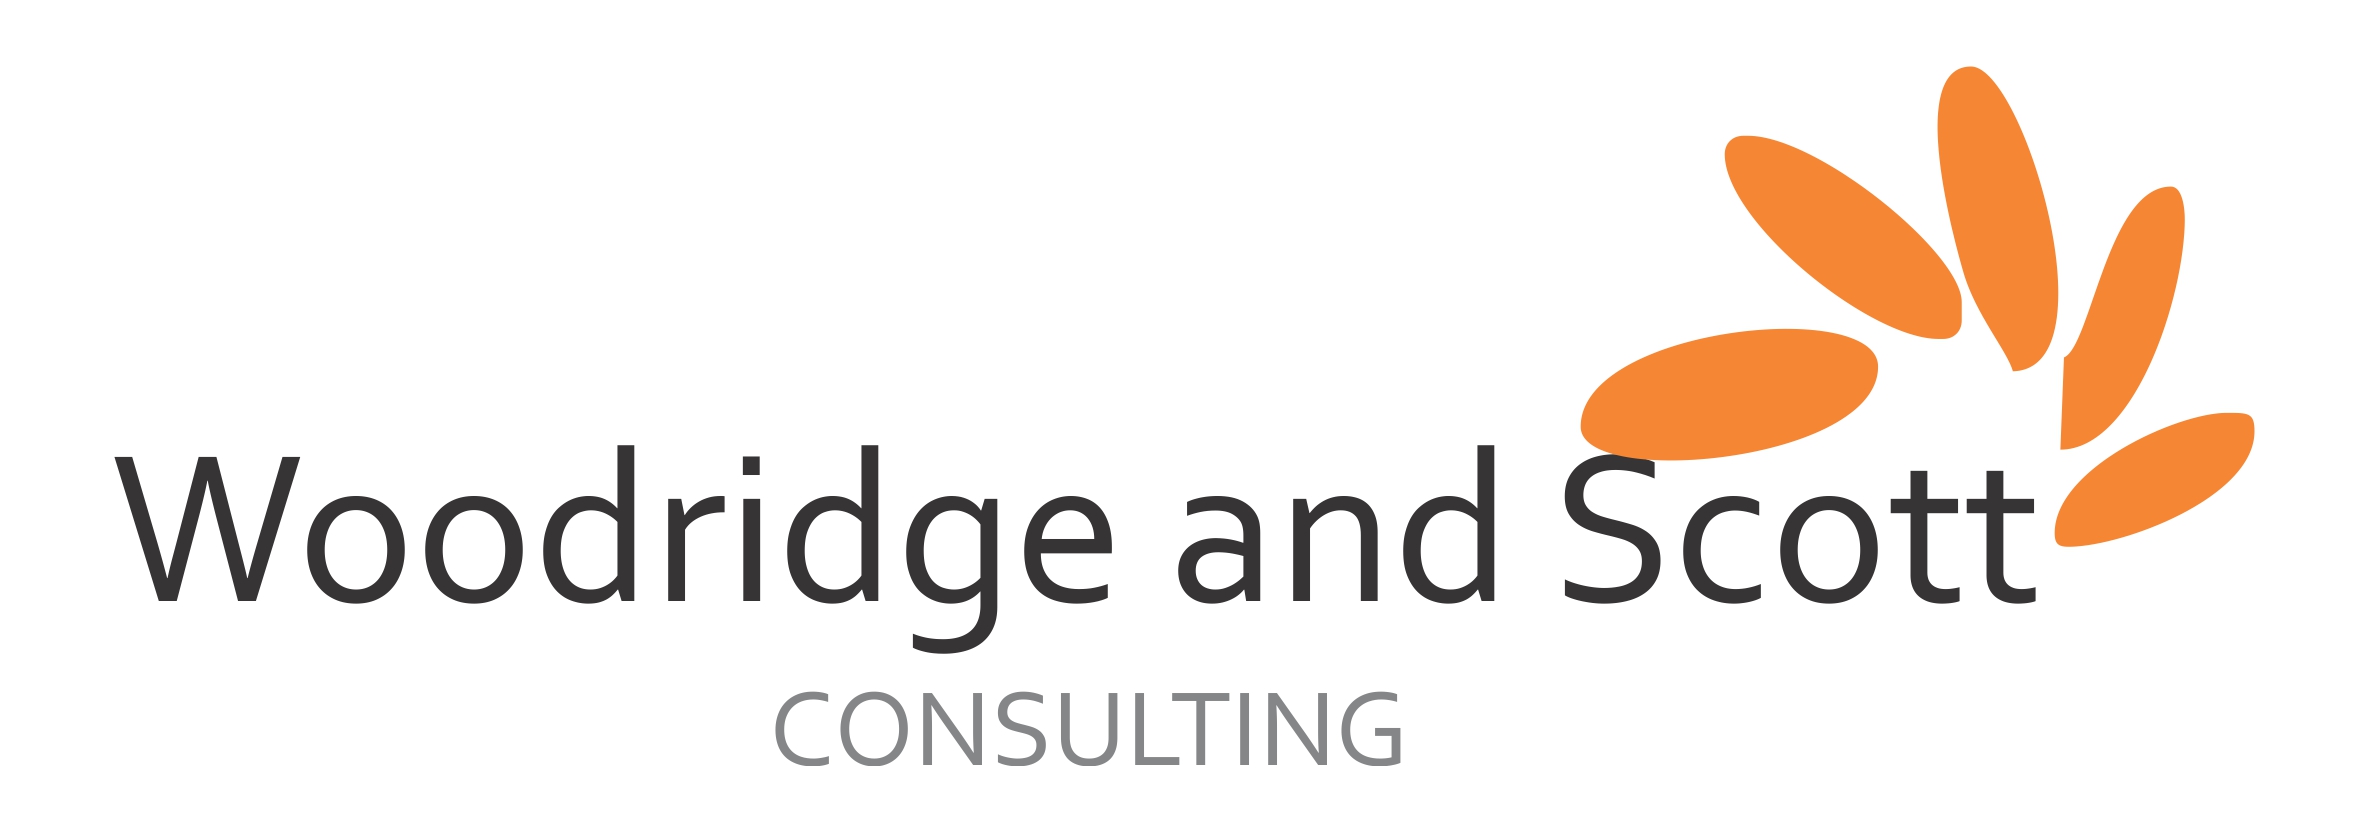 WOODRIDGE AND SCOTT Consulting Services